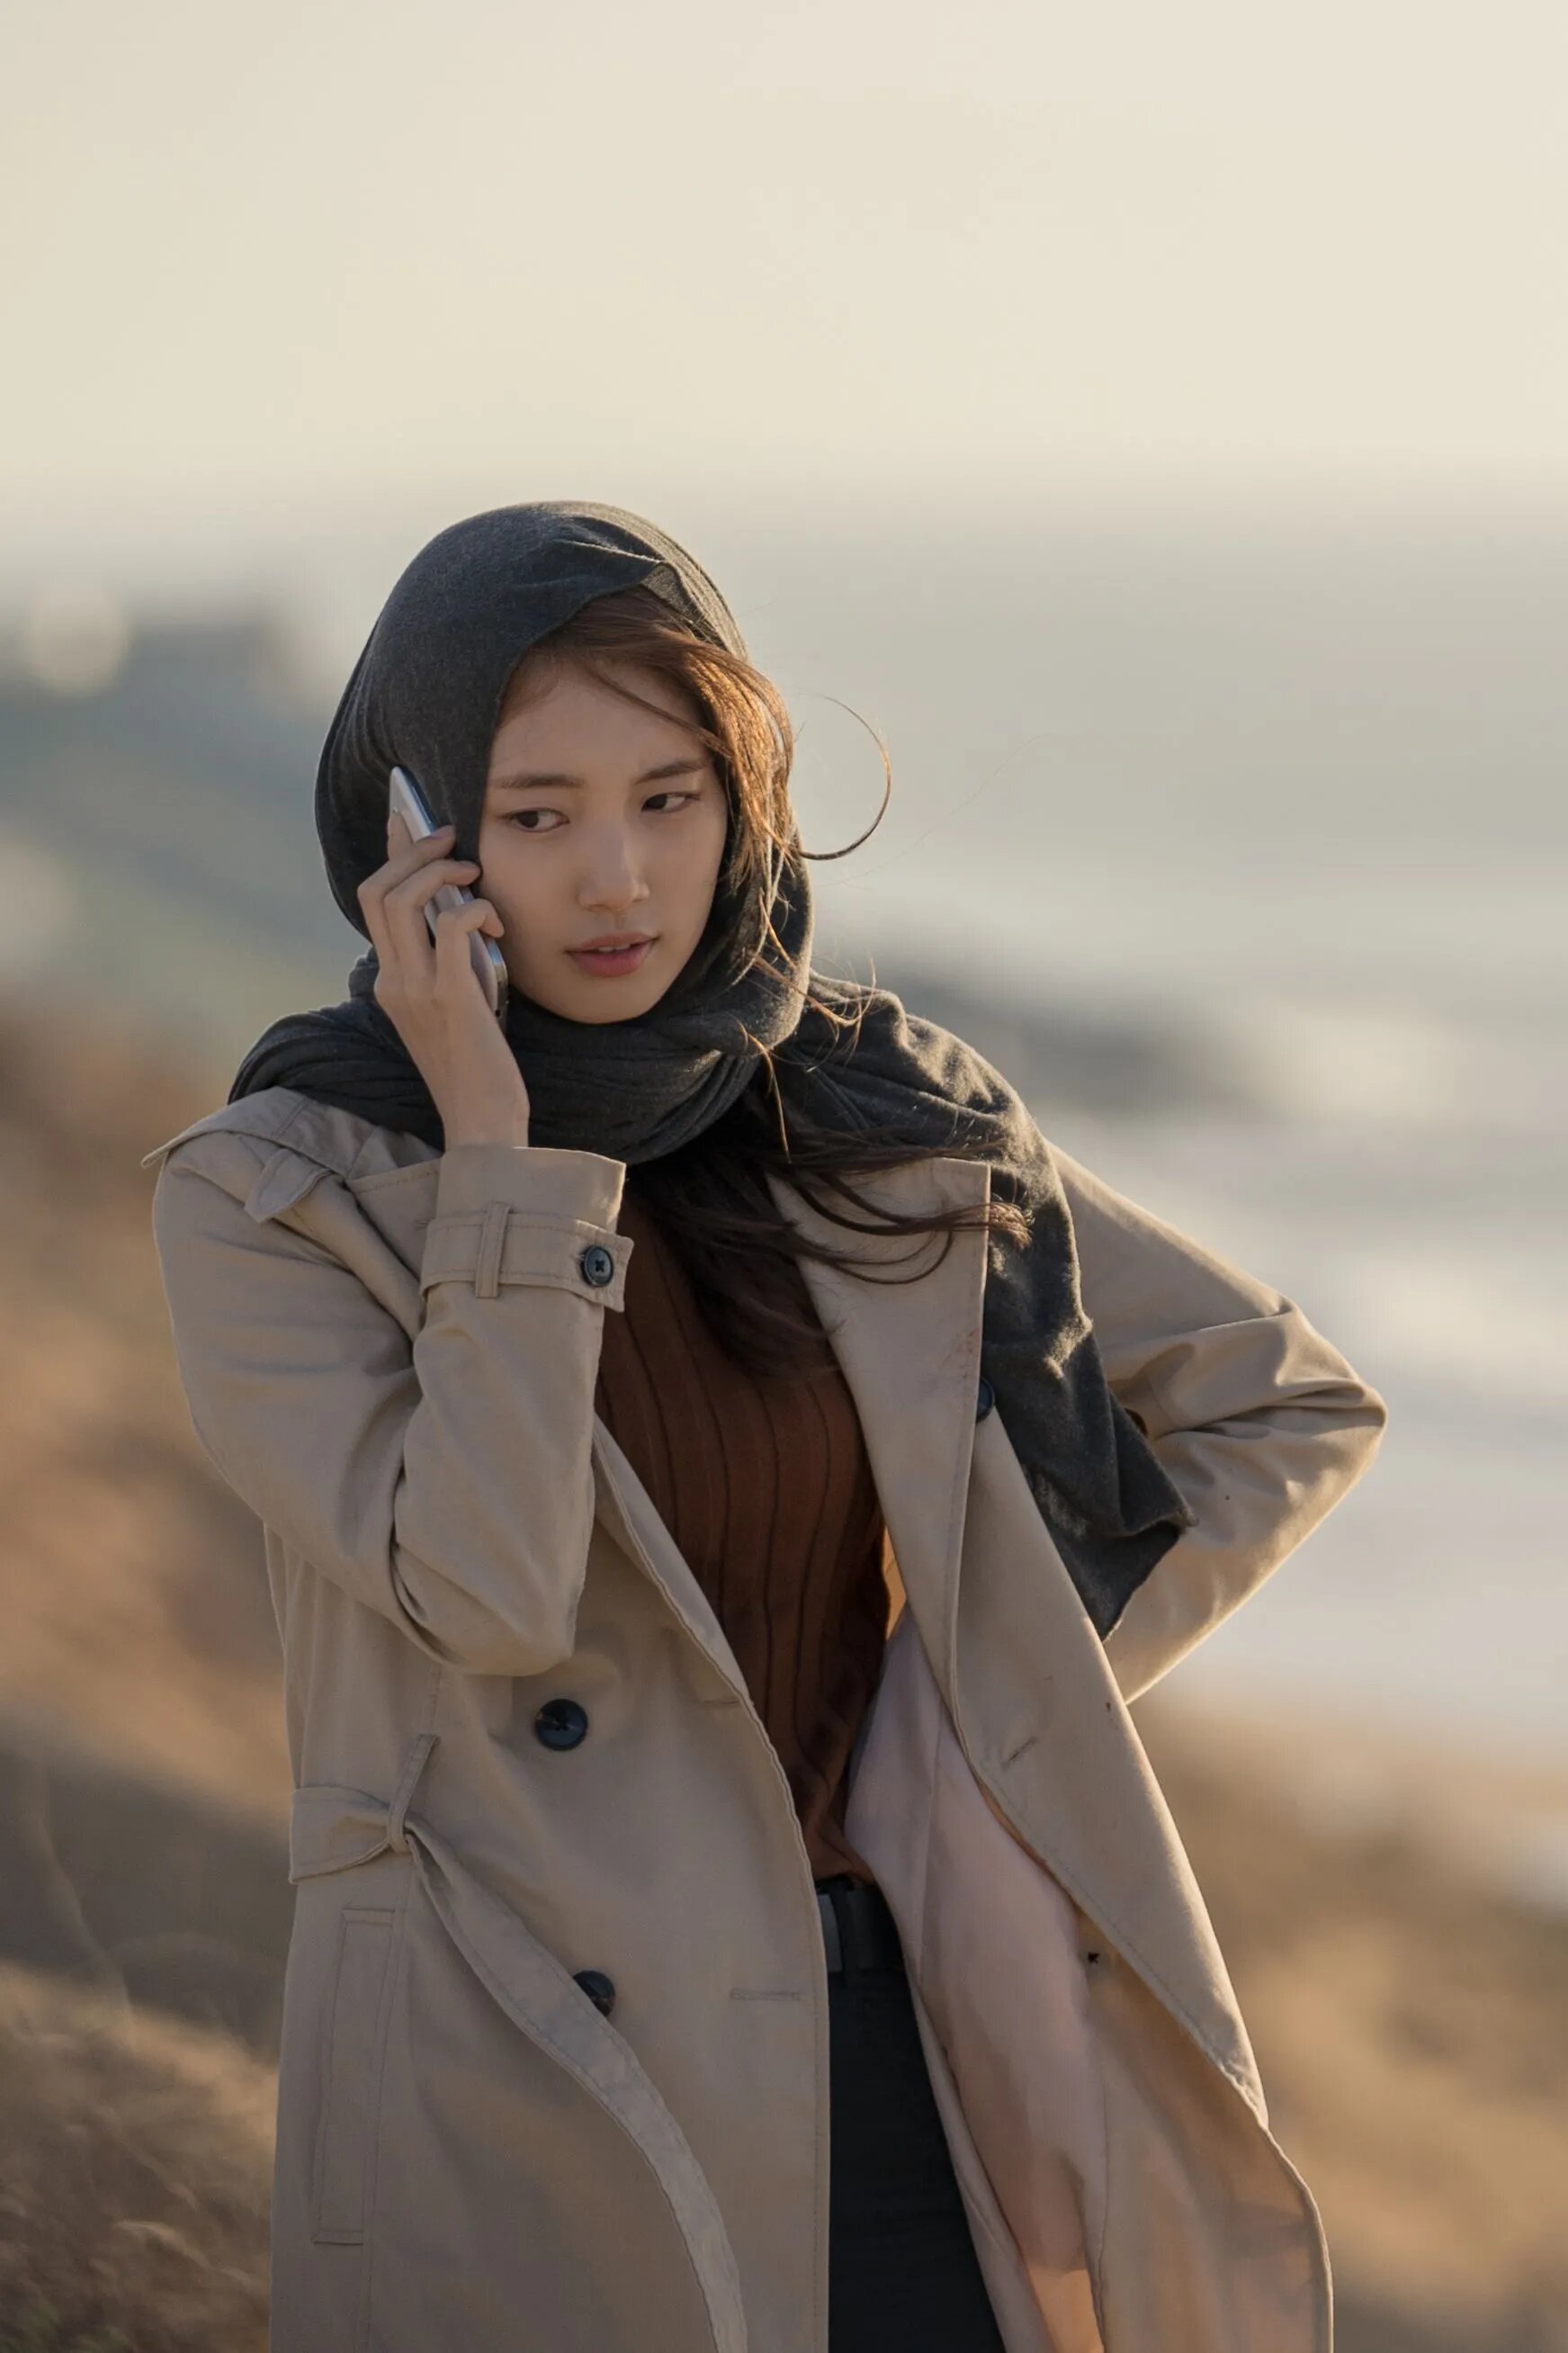 byrde slids Skelne Suzy - SBS Drama 'Vagabond' behind the scenes photos | Kpopping